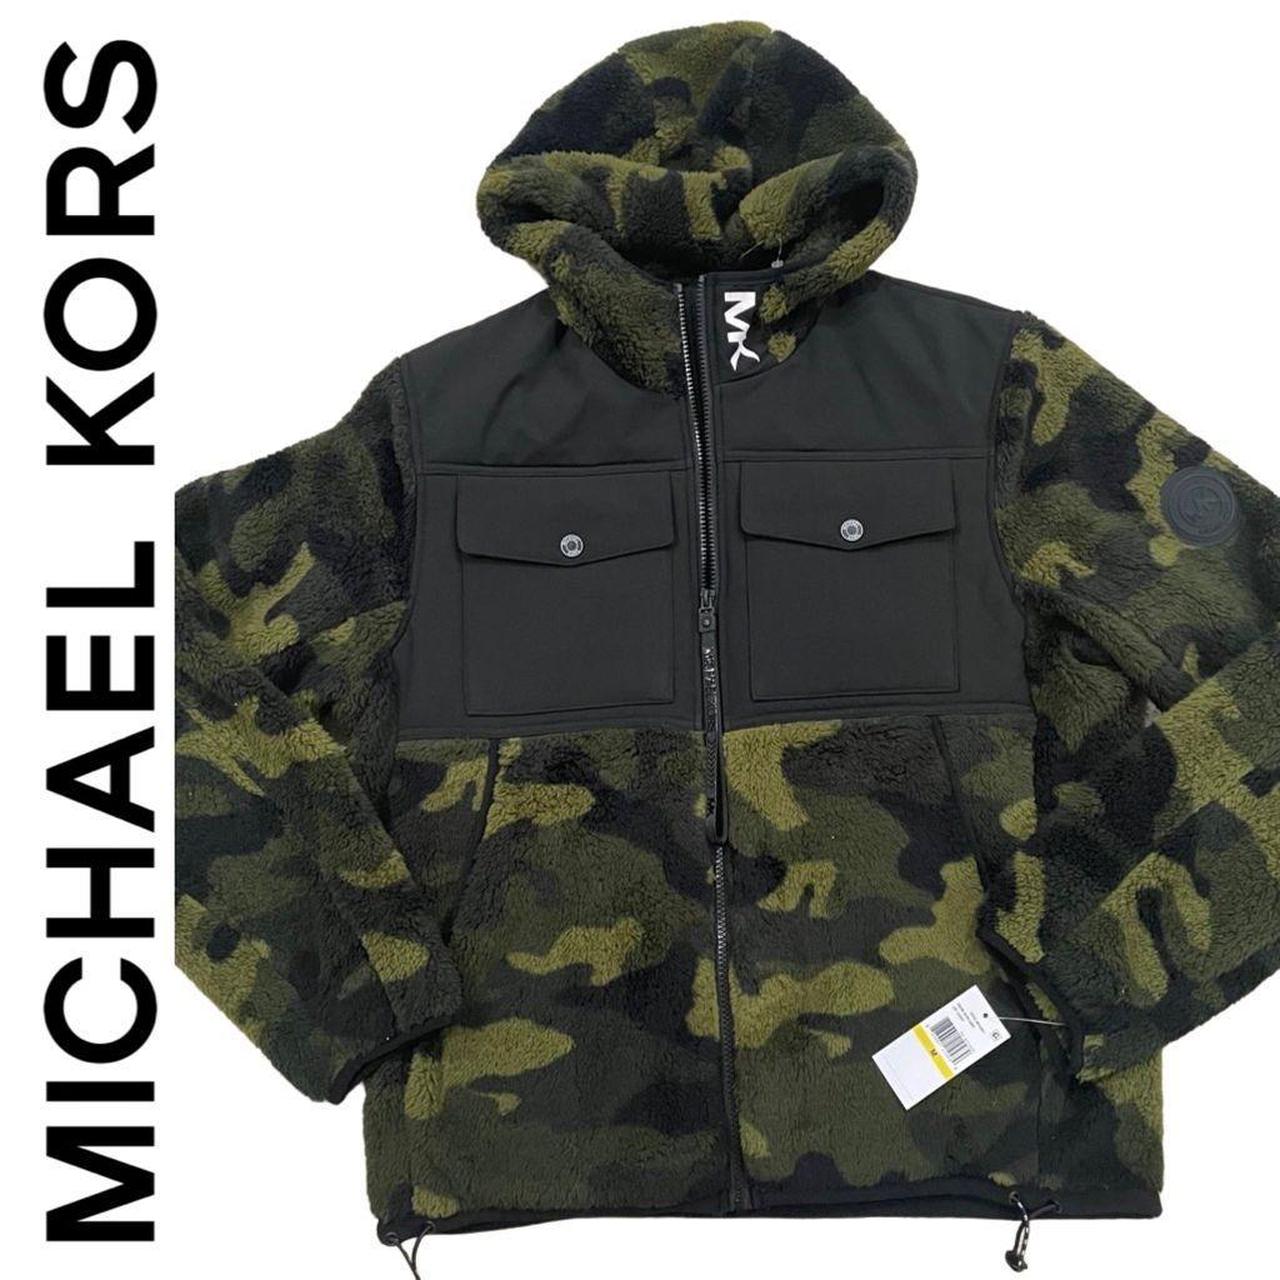 Michael Kors Men's Green and Black Jacket | Depop